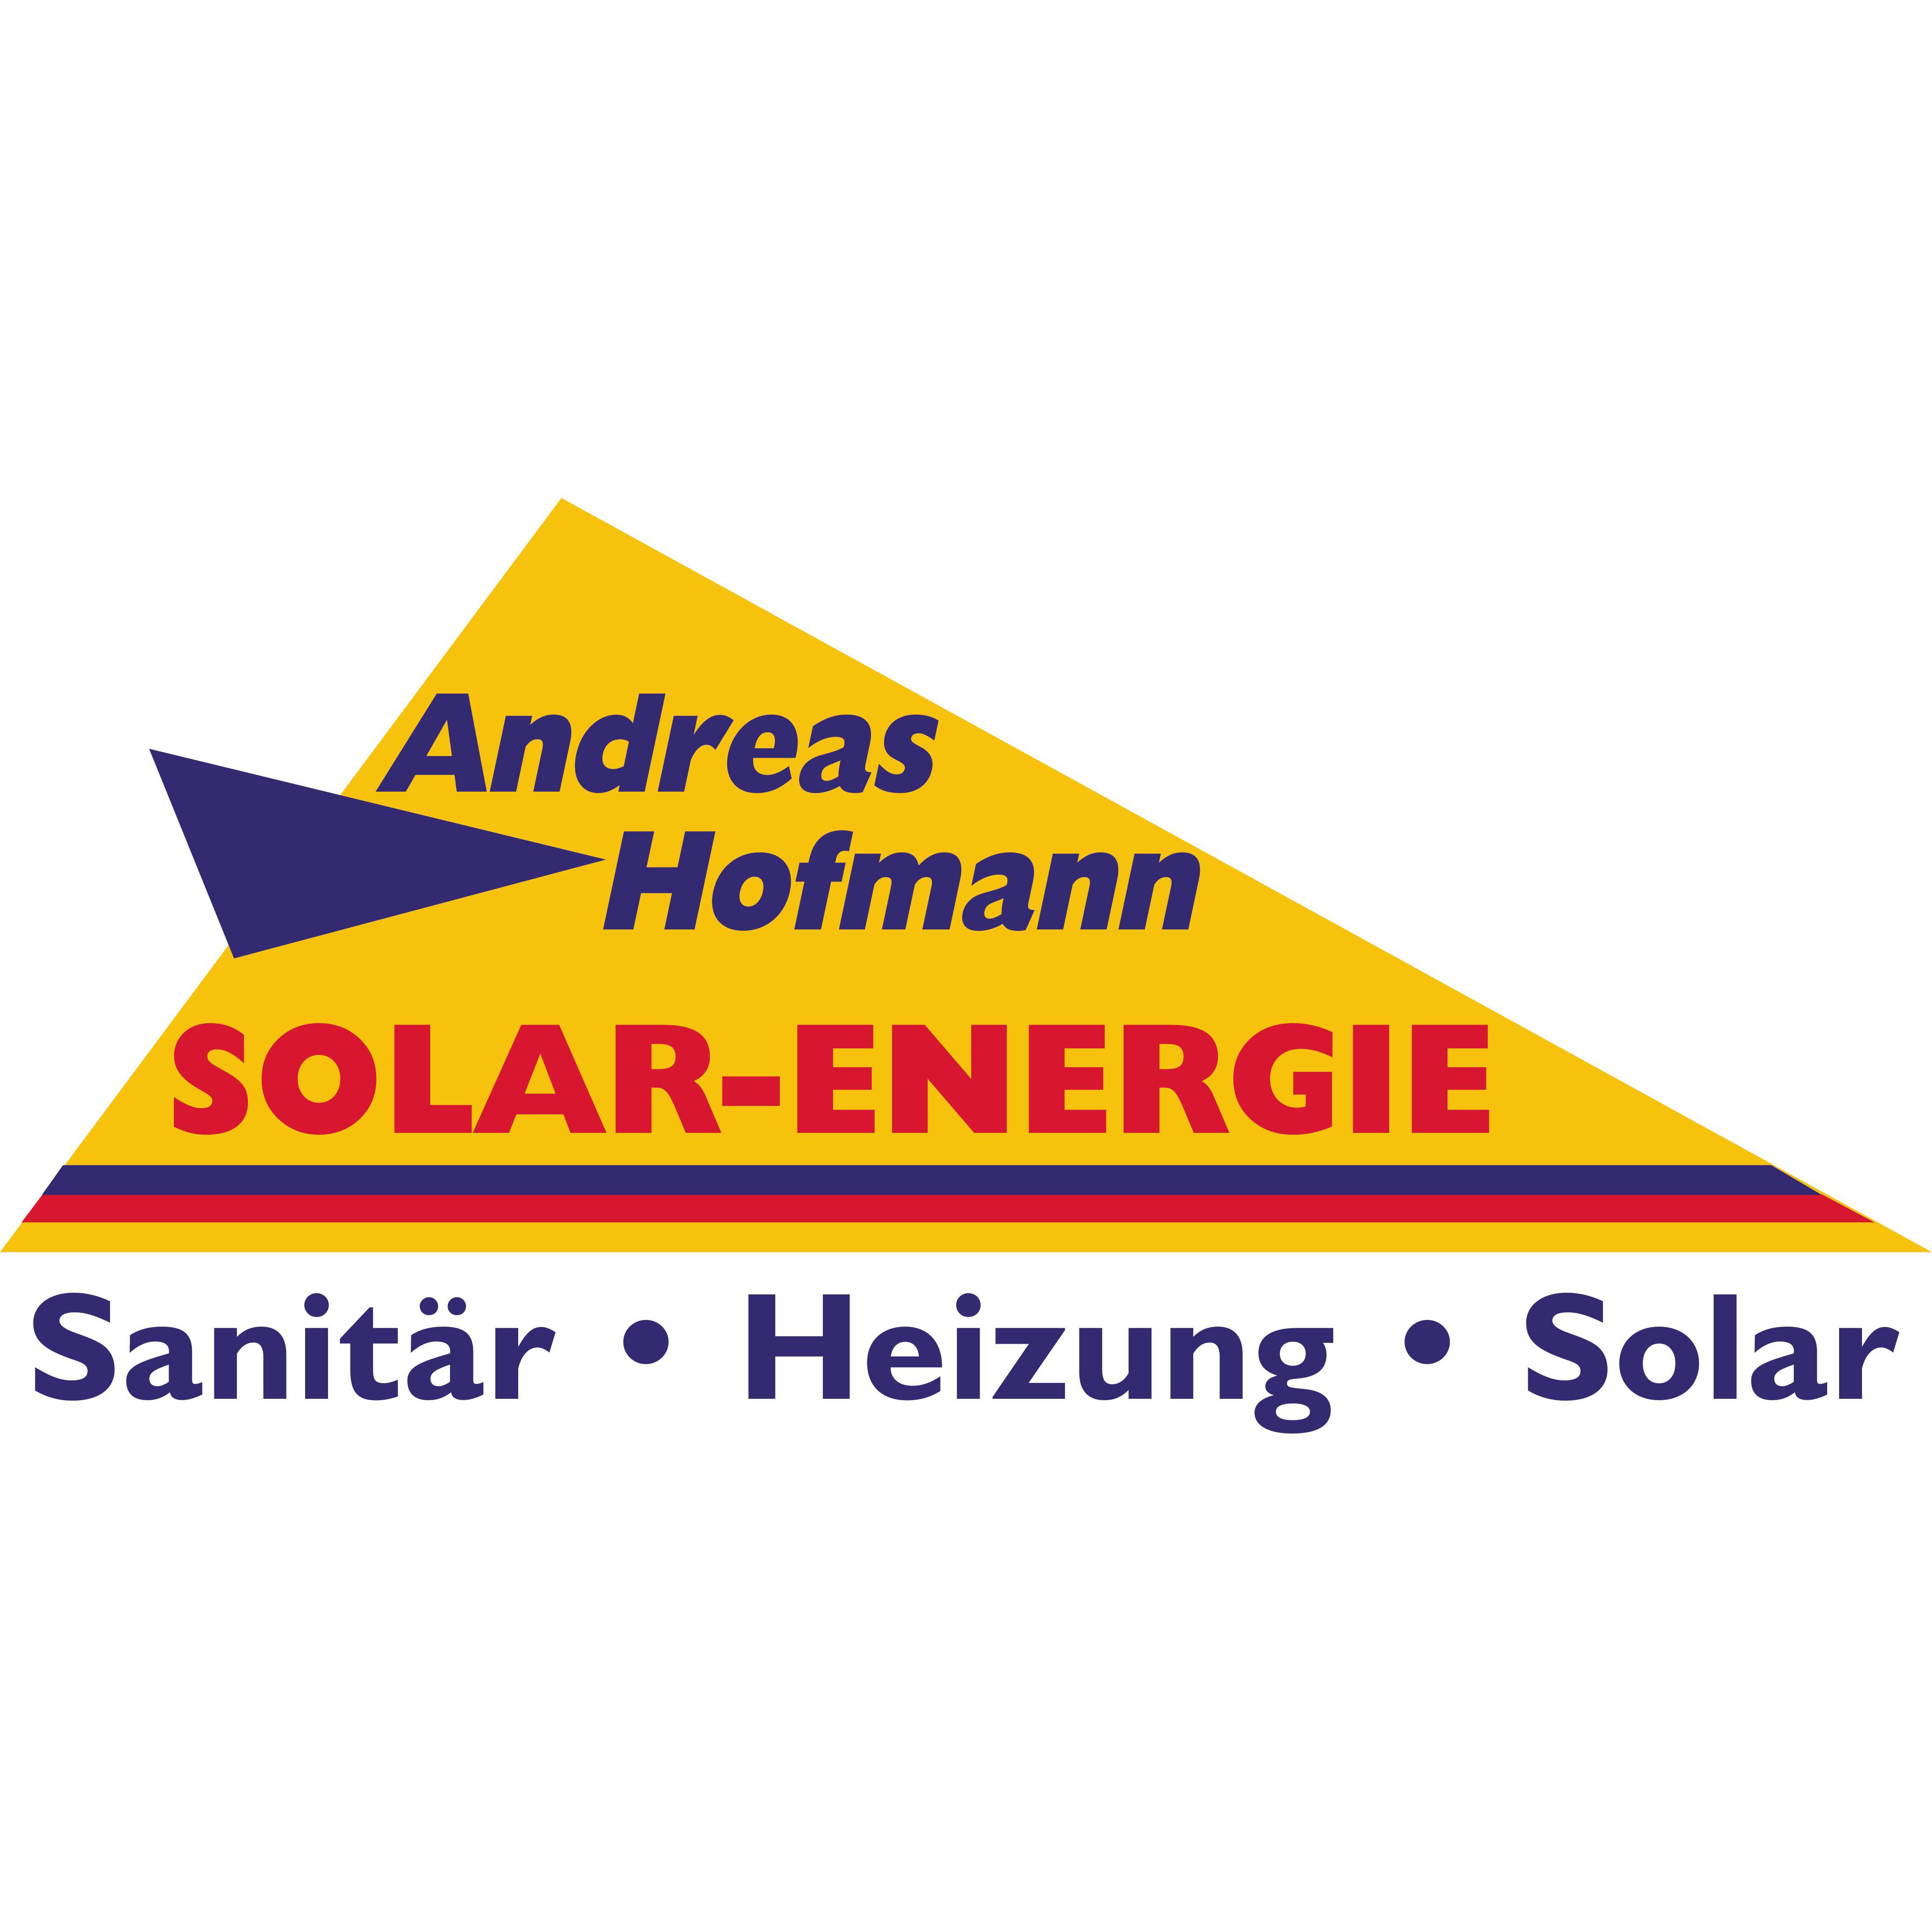 Andreas Hofmann Logo